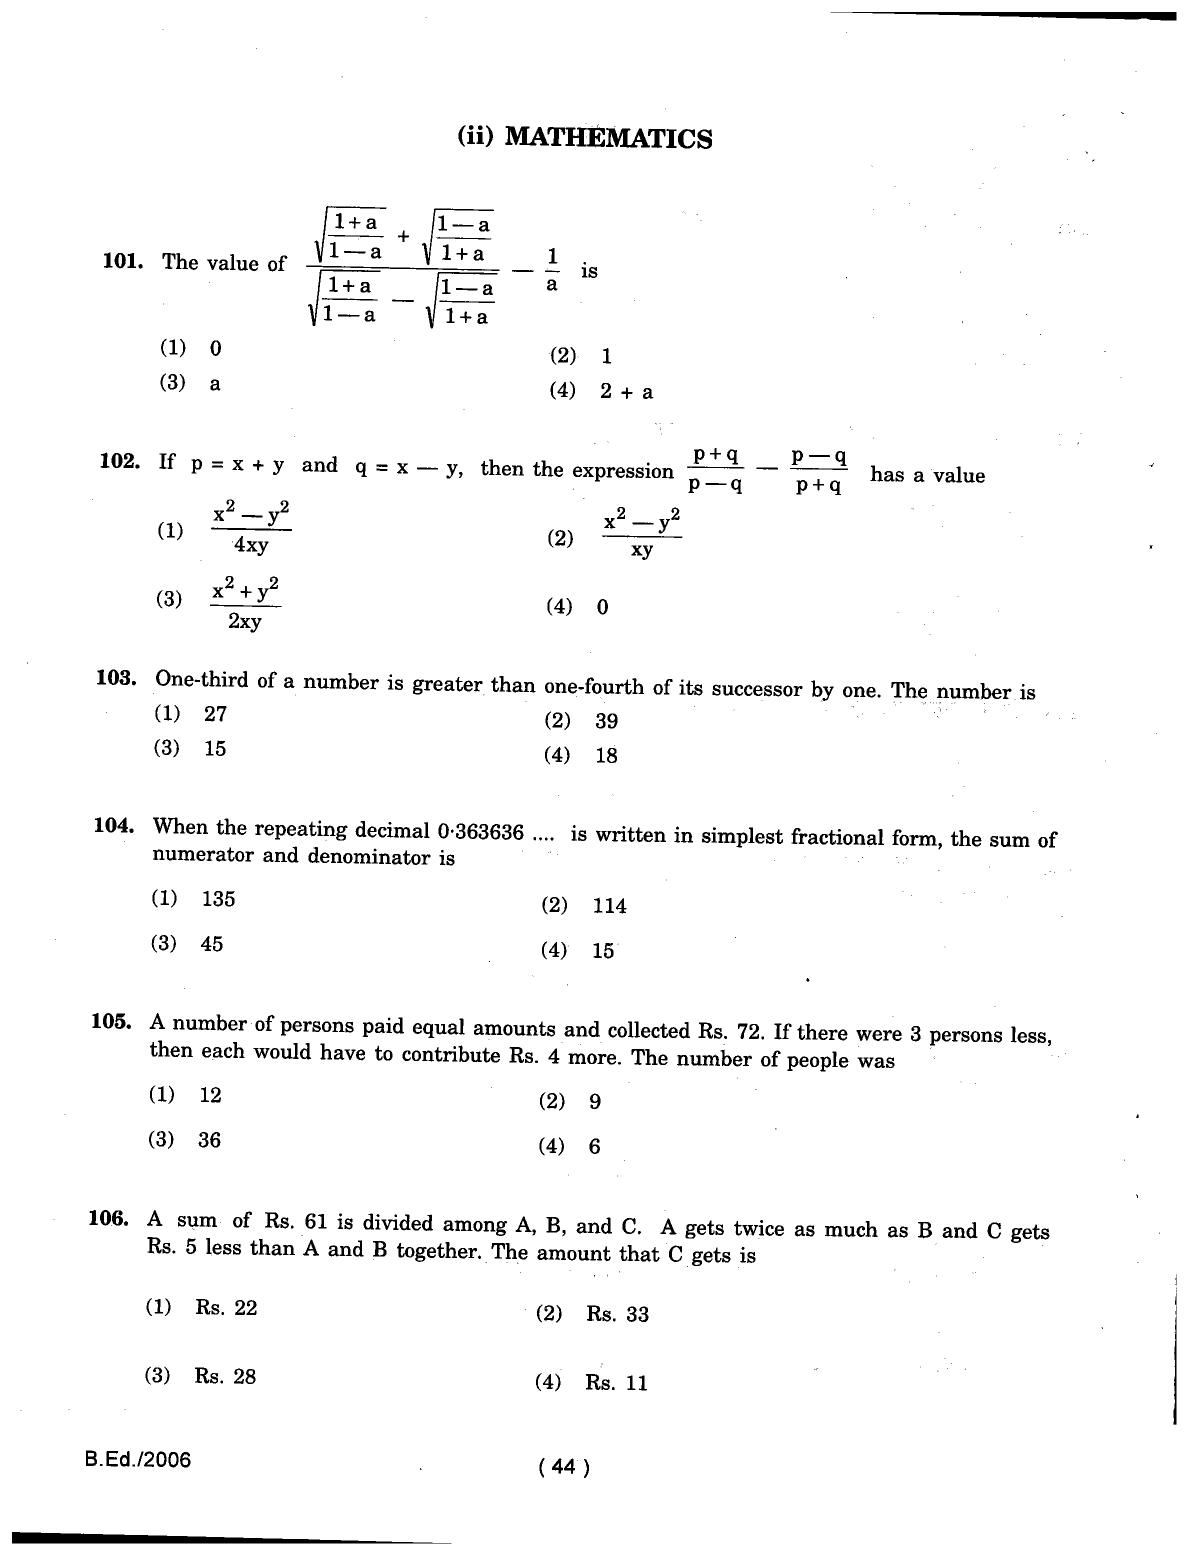 IGNOU B.Ed 2006 Question Paper - Page 44